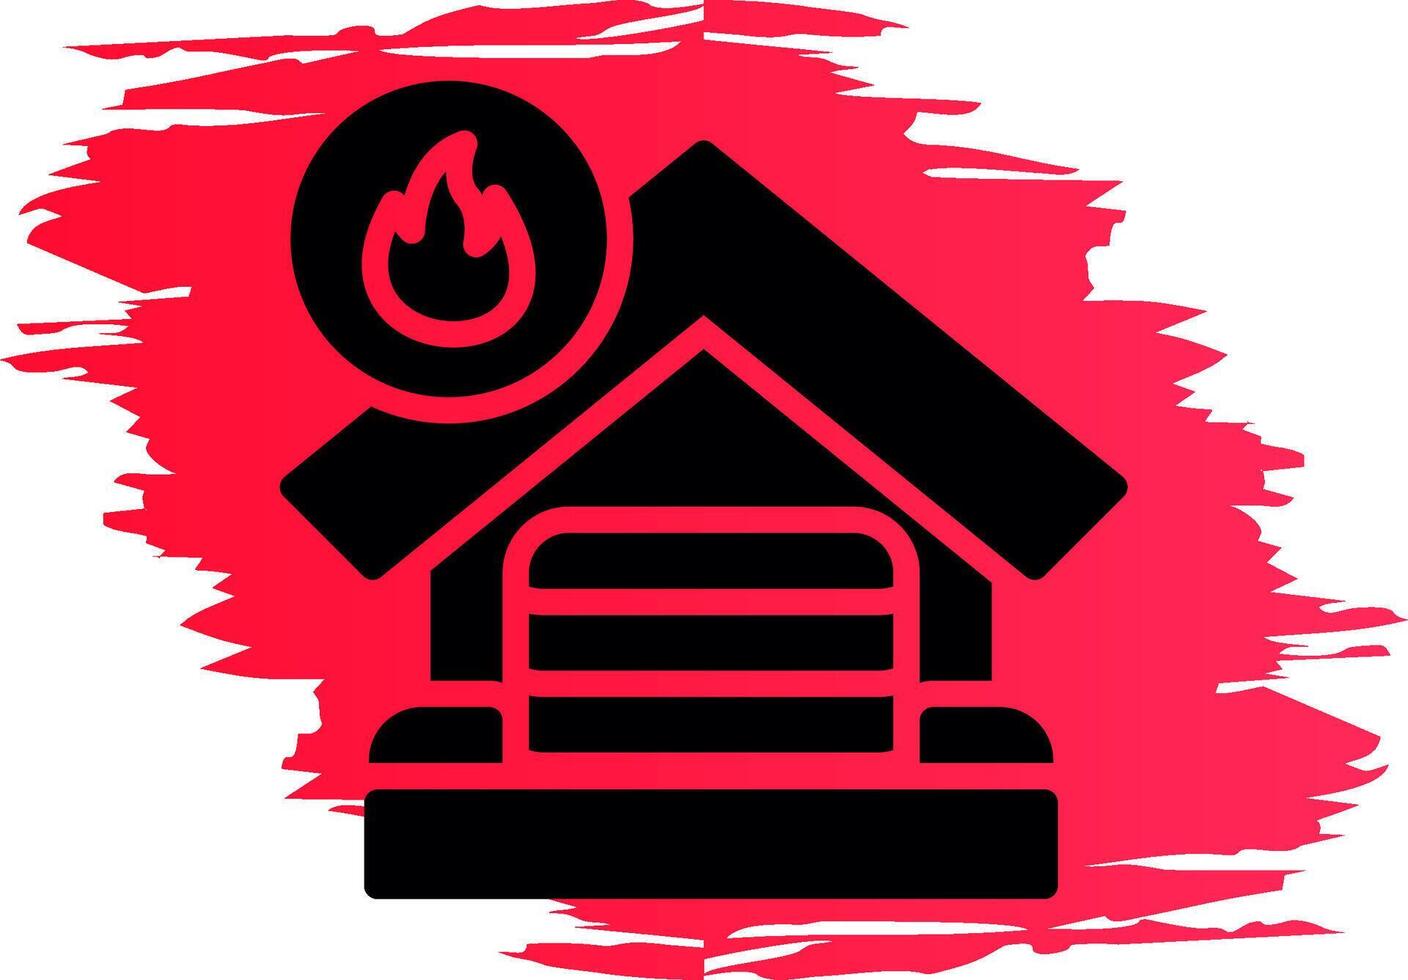 Fire Department Creative Icon Design vector